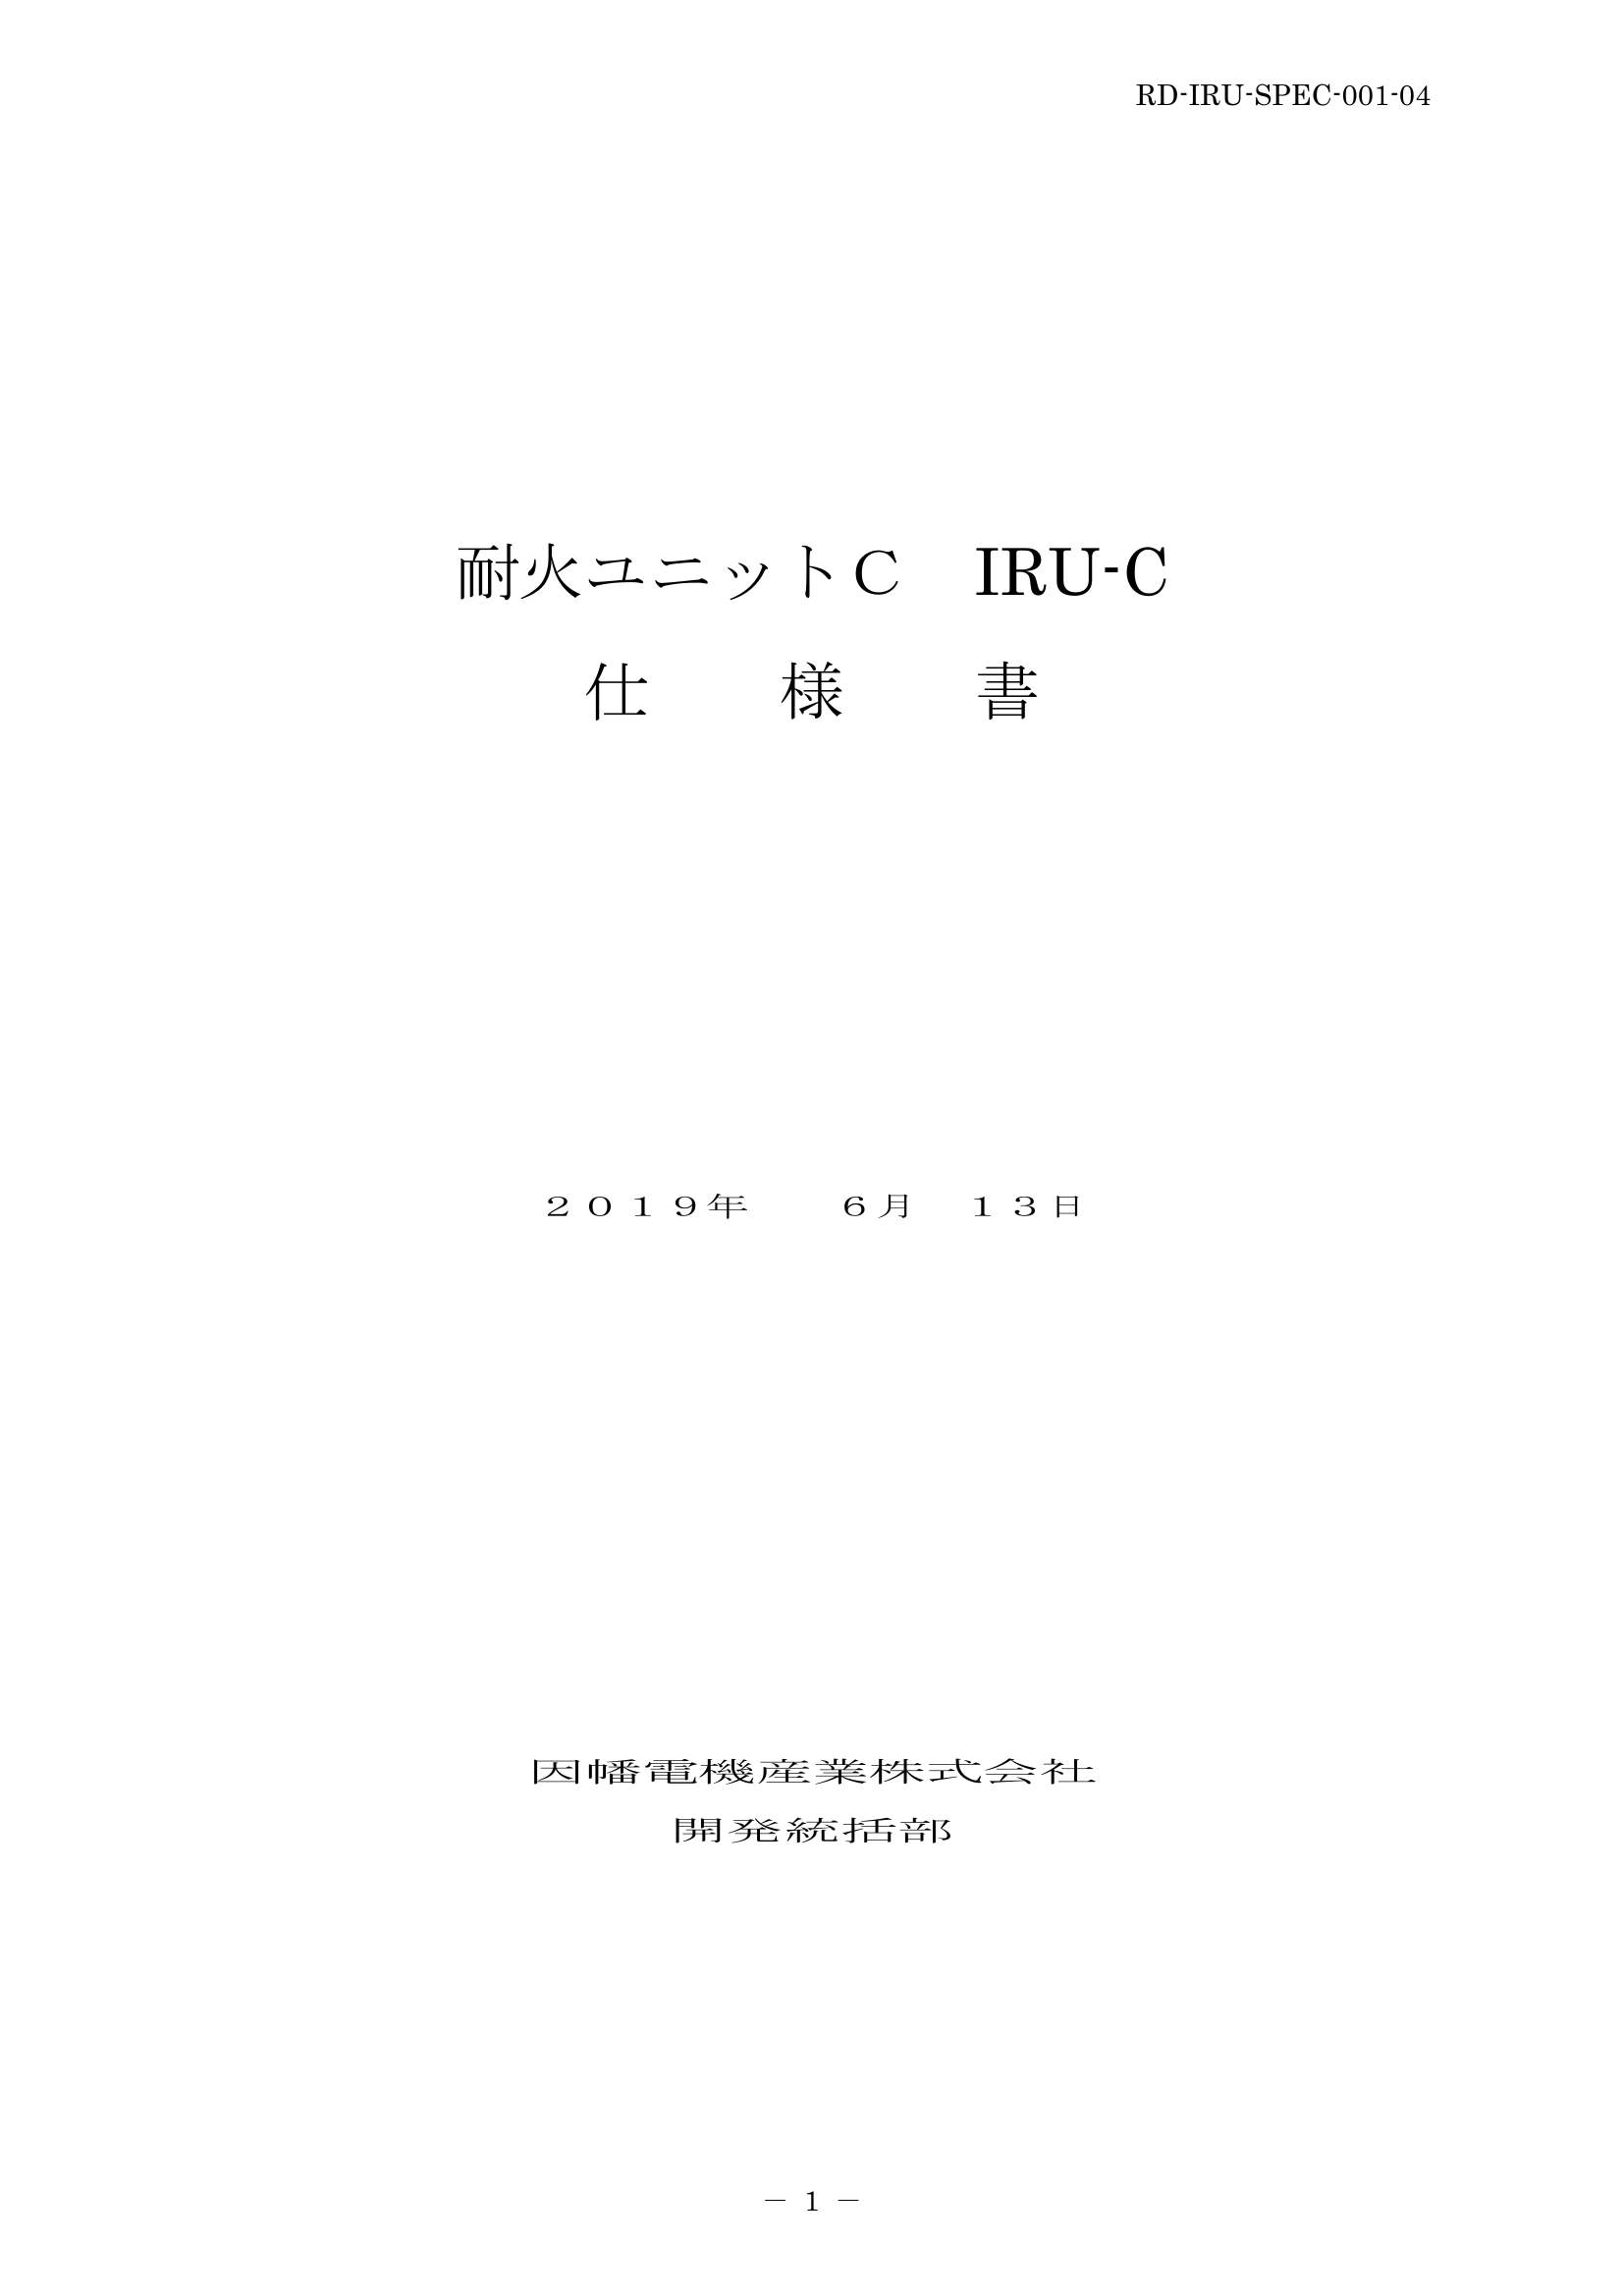 IRU-C_仕様書_20190613-0W.pdf